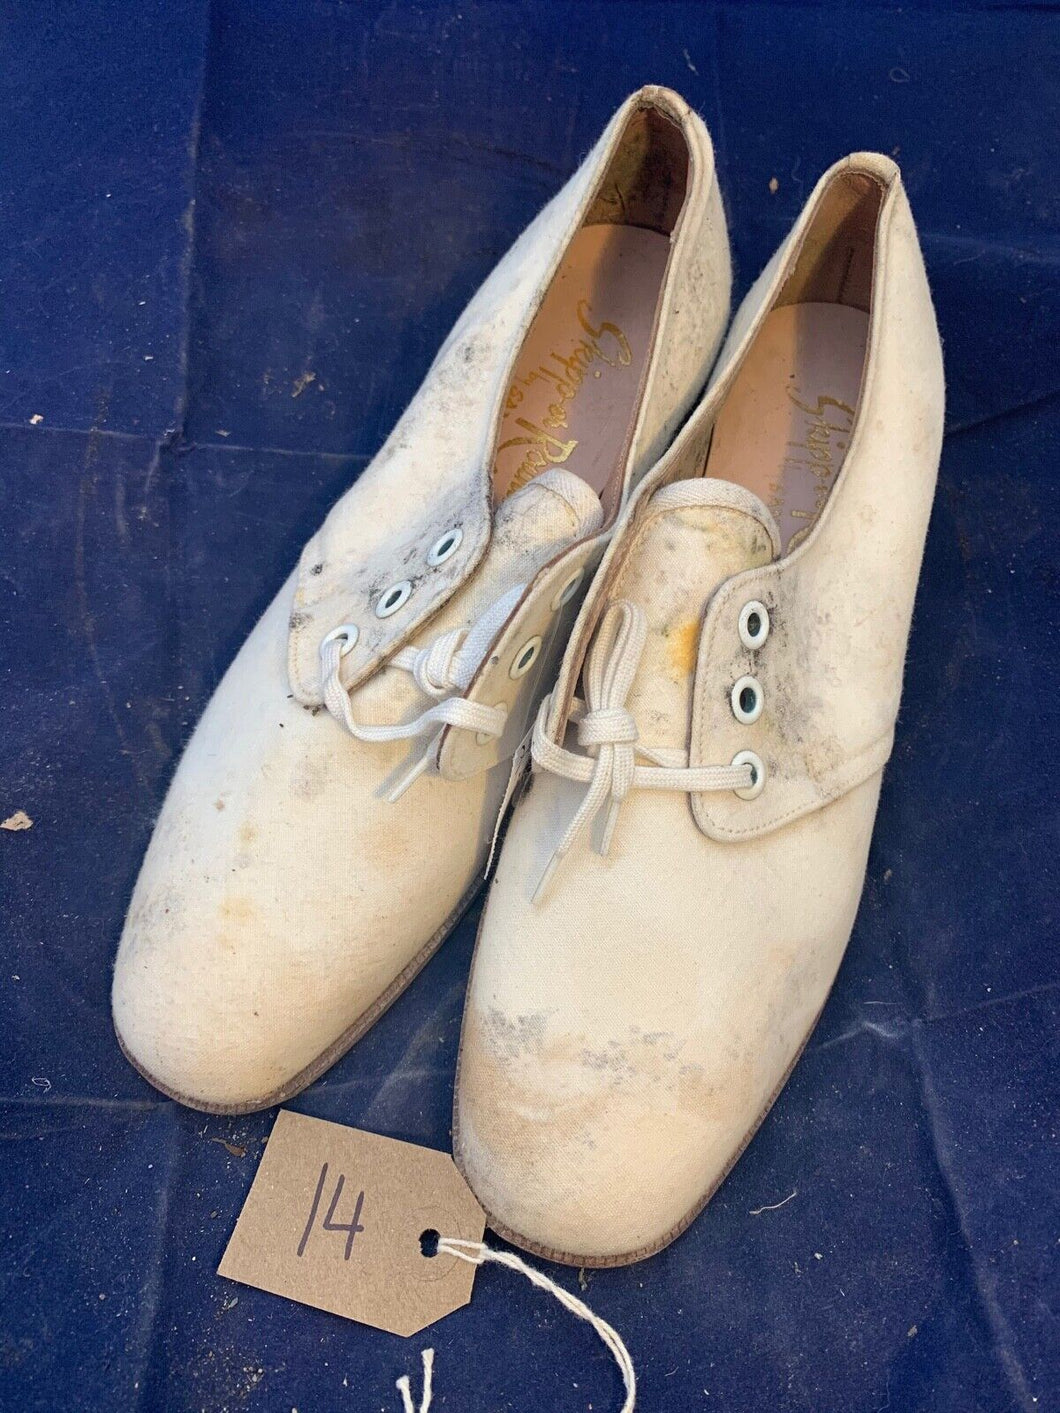 Original WW2 British Army Women's White Summer Shoes - ATS WAAF - Size 245s #14